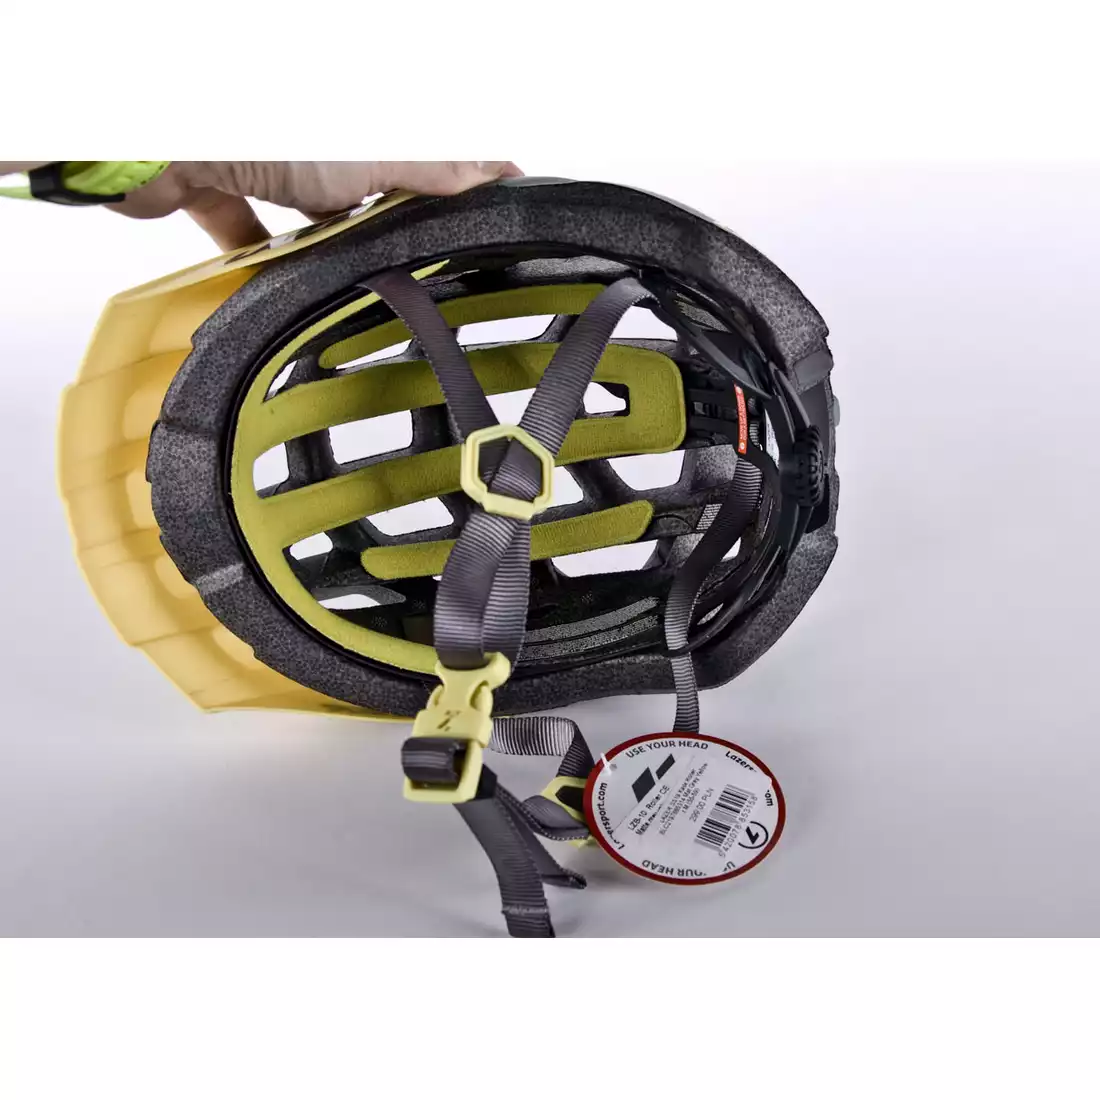 LAZER ROLLER MTB kask rowerowy TS+ szary mat zółty